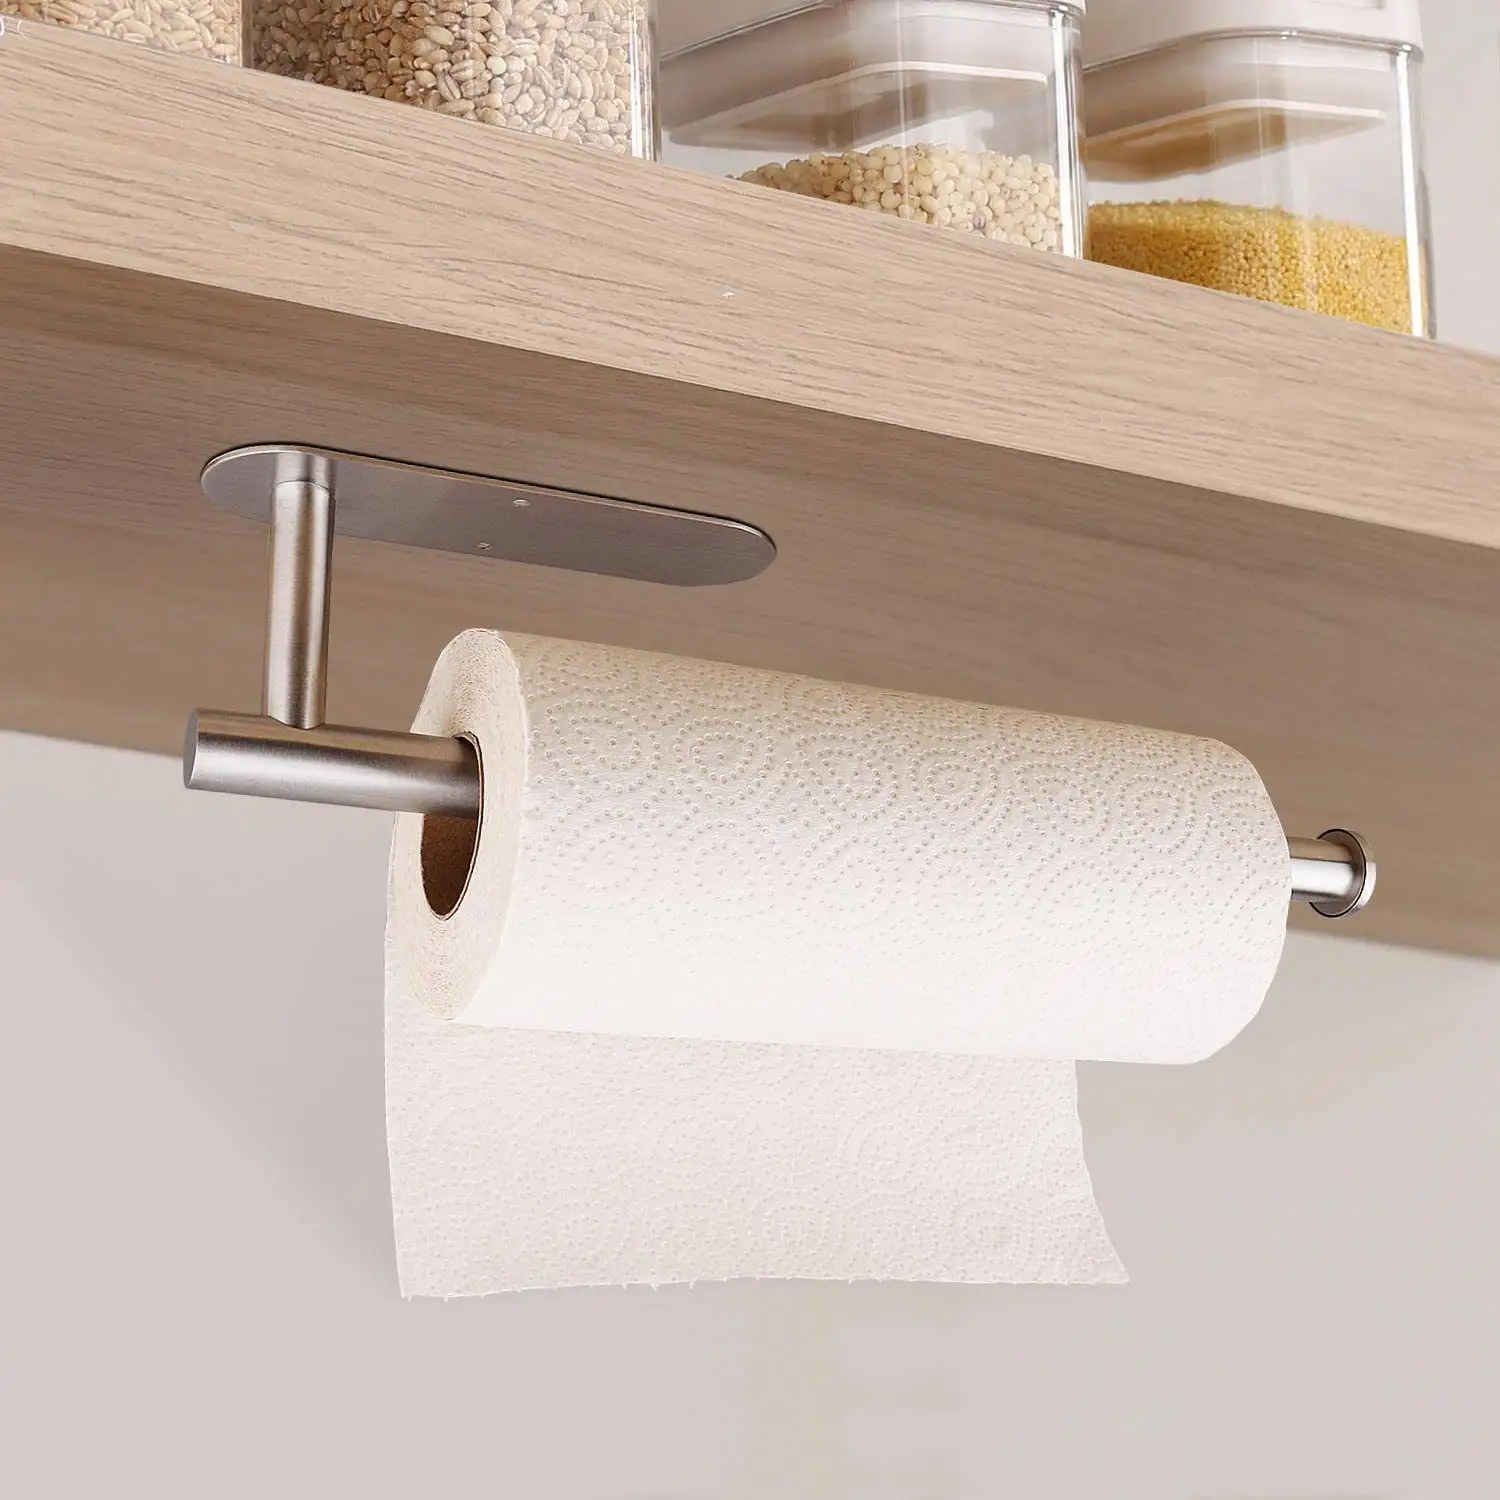 Moderner Wand-Toiletten papier halter Toiletten papier halter Moderner Wand-Toiletten papier halter